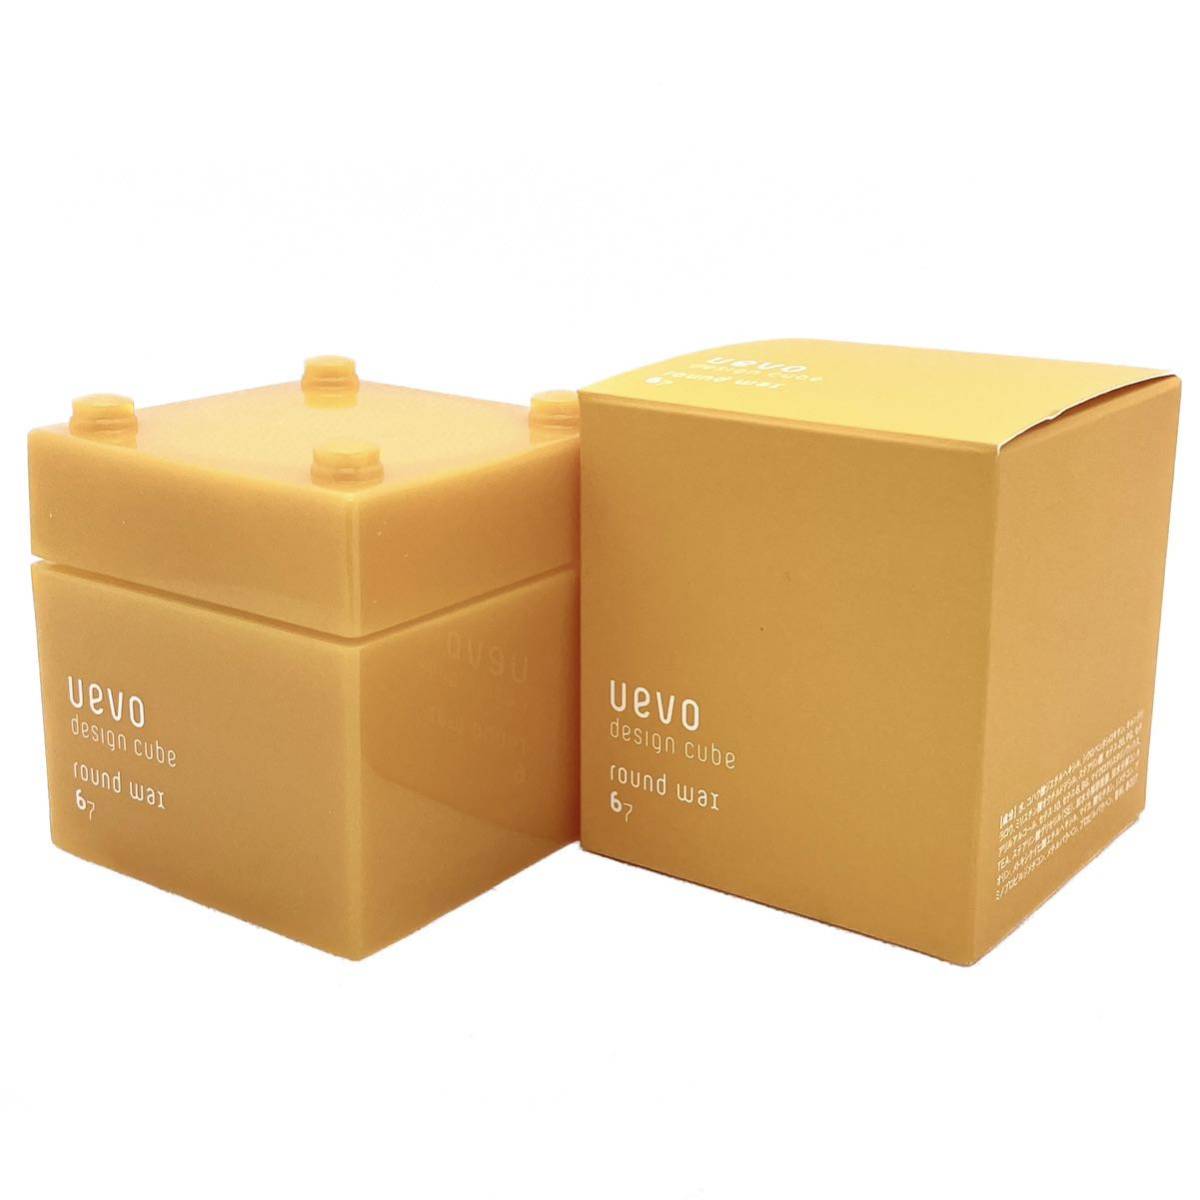 [ nationwide free shipping * new goods * unused ]DEMI*temi*UEVO* way bo* design Cube * round wax *80g